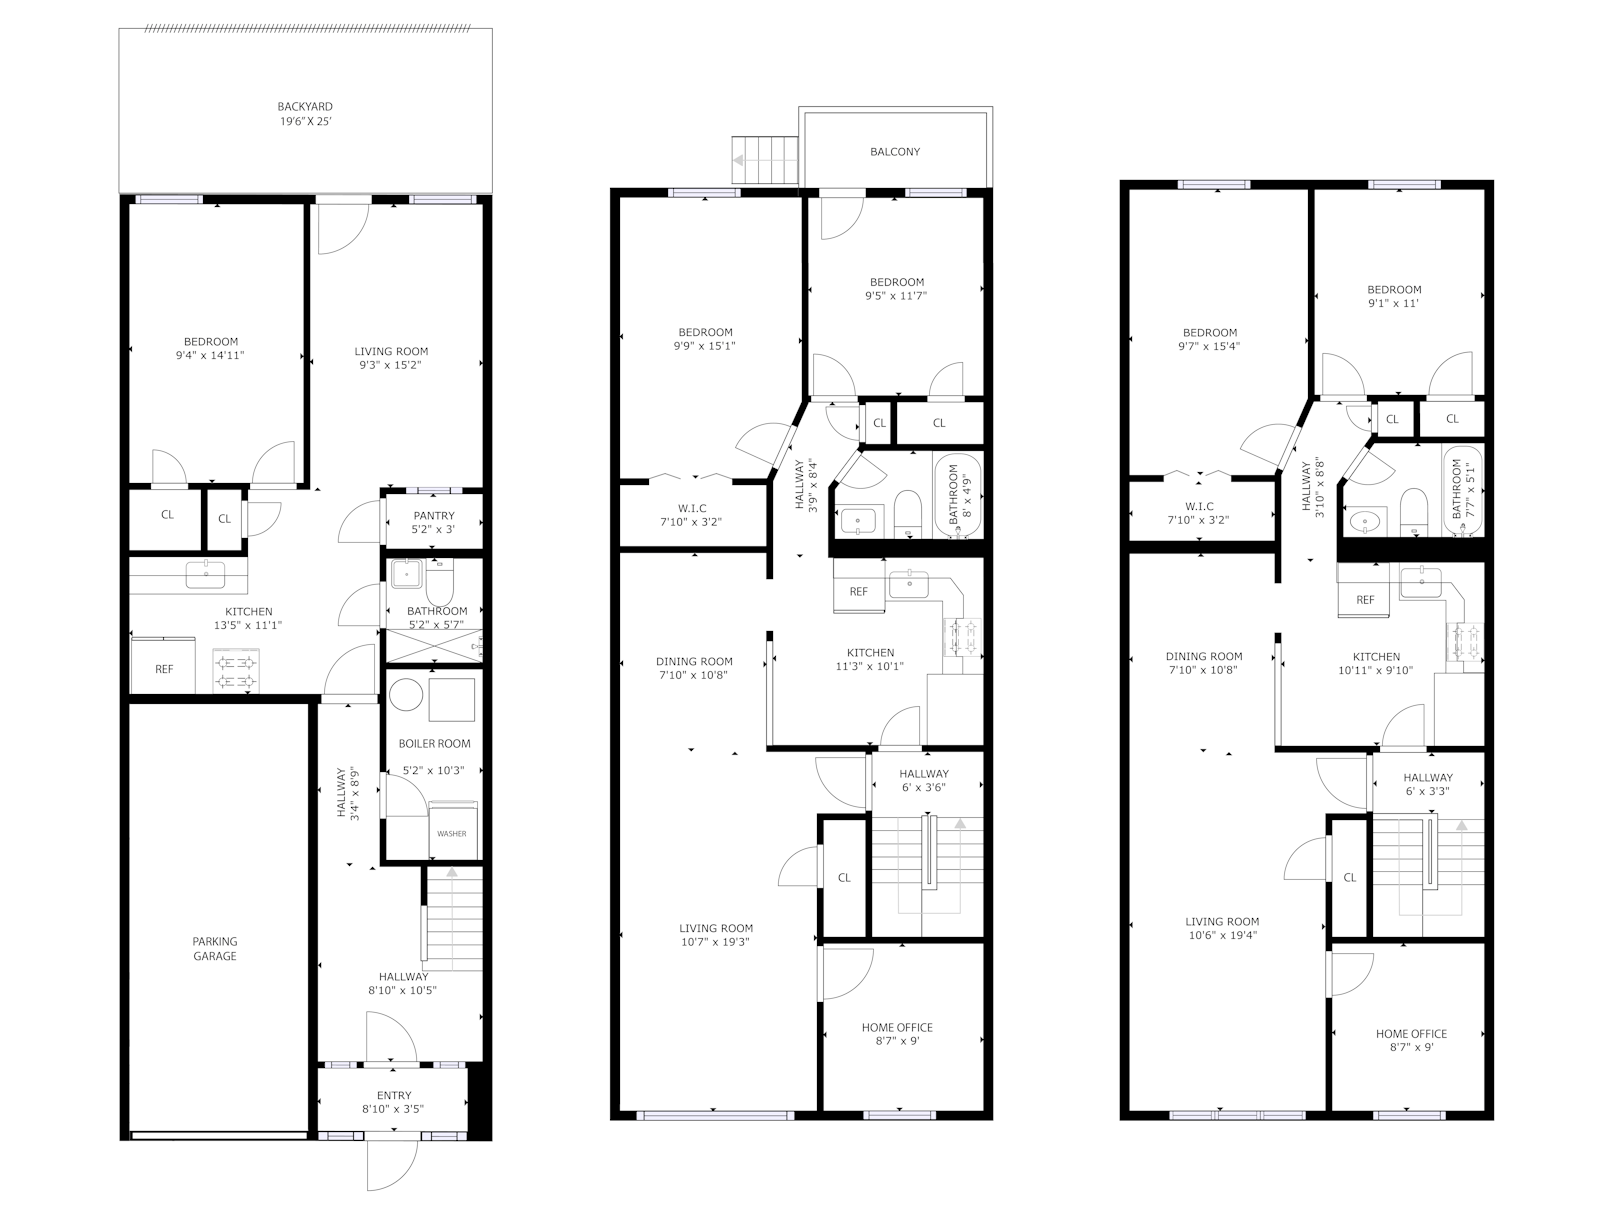 Floorplan for 30 -43 69th Street